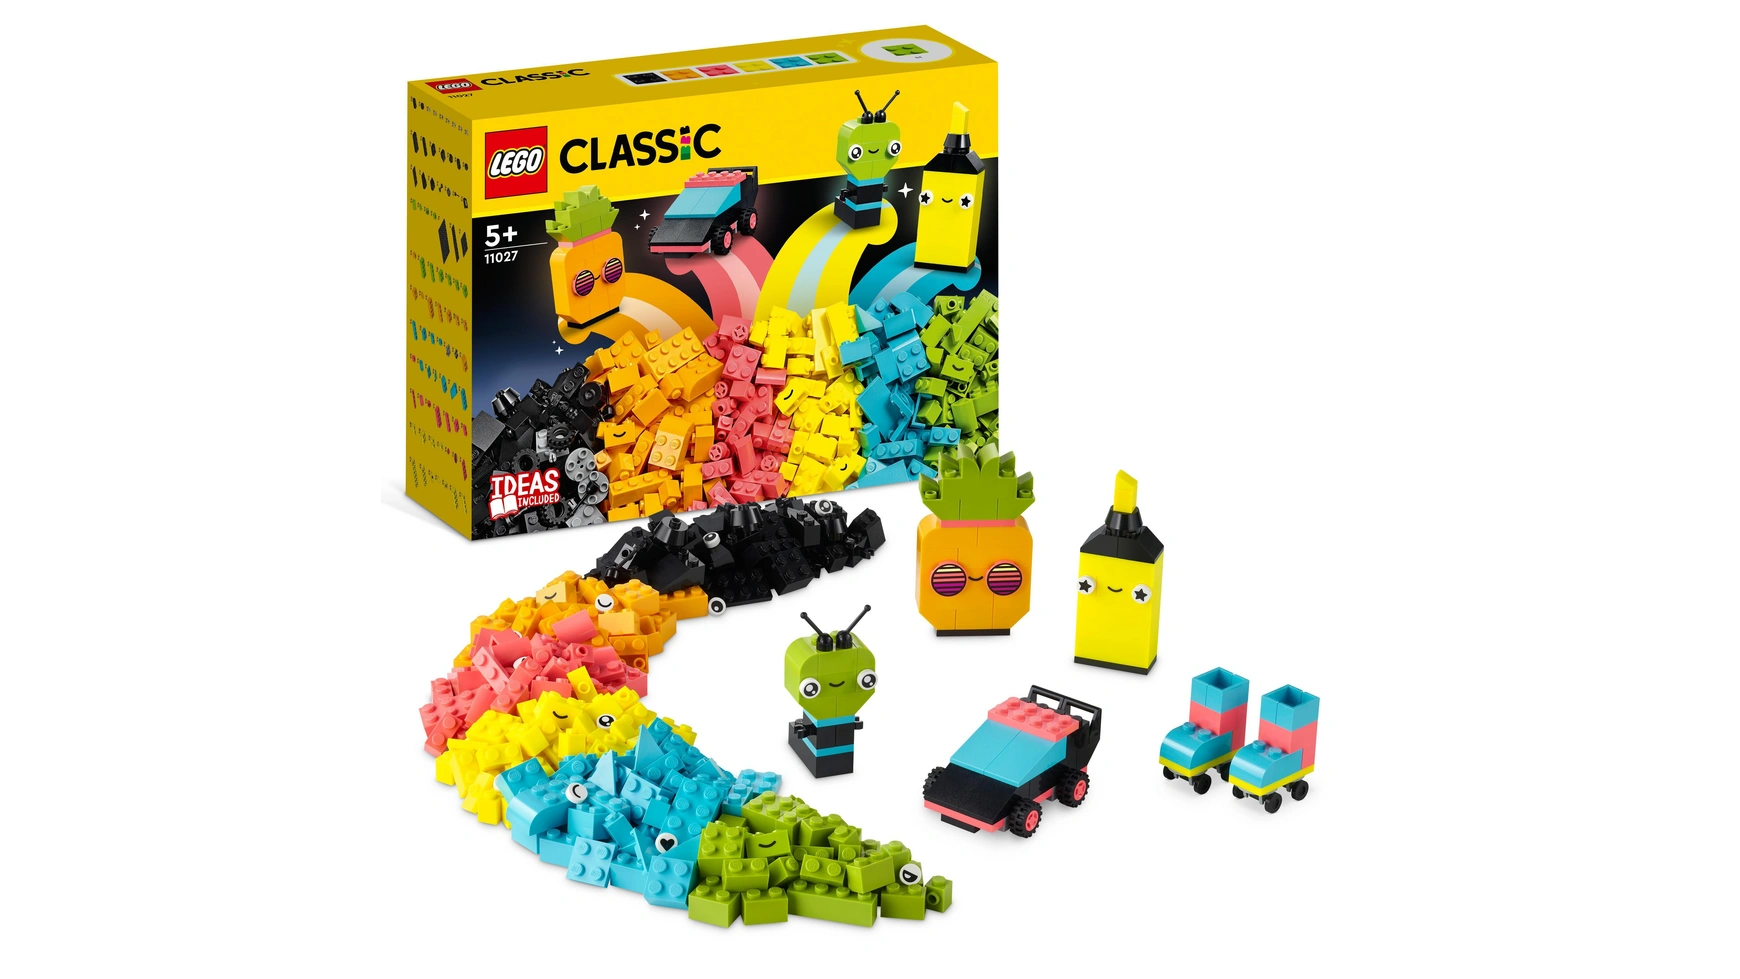 Lego Classic Неоновый творческий набор, строительные блоки для детей от 5 лет и старше micro particle plastic building blocks lego cartoon series creative assembled building block toys